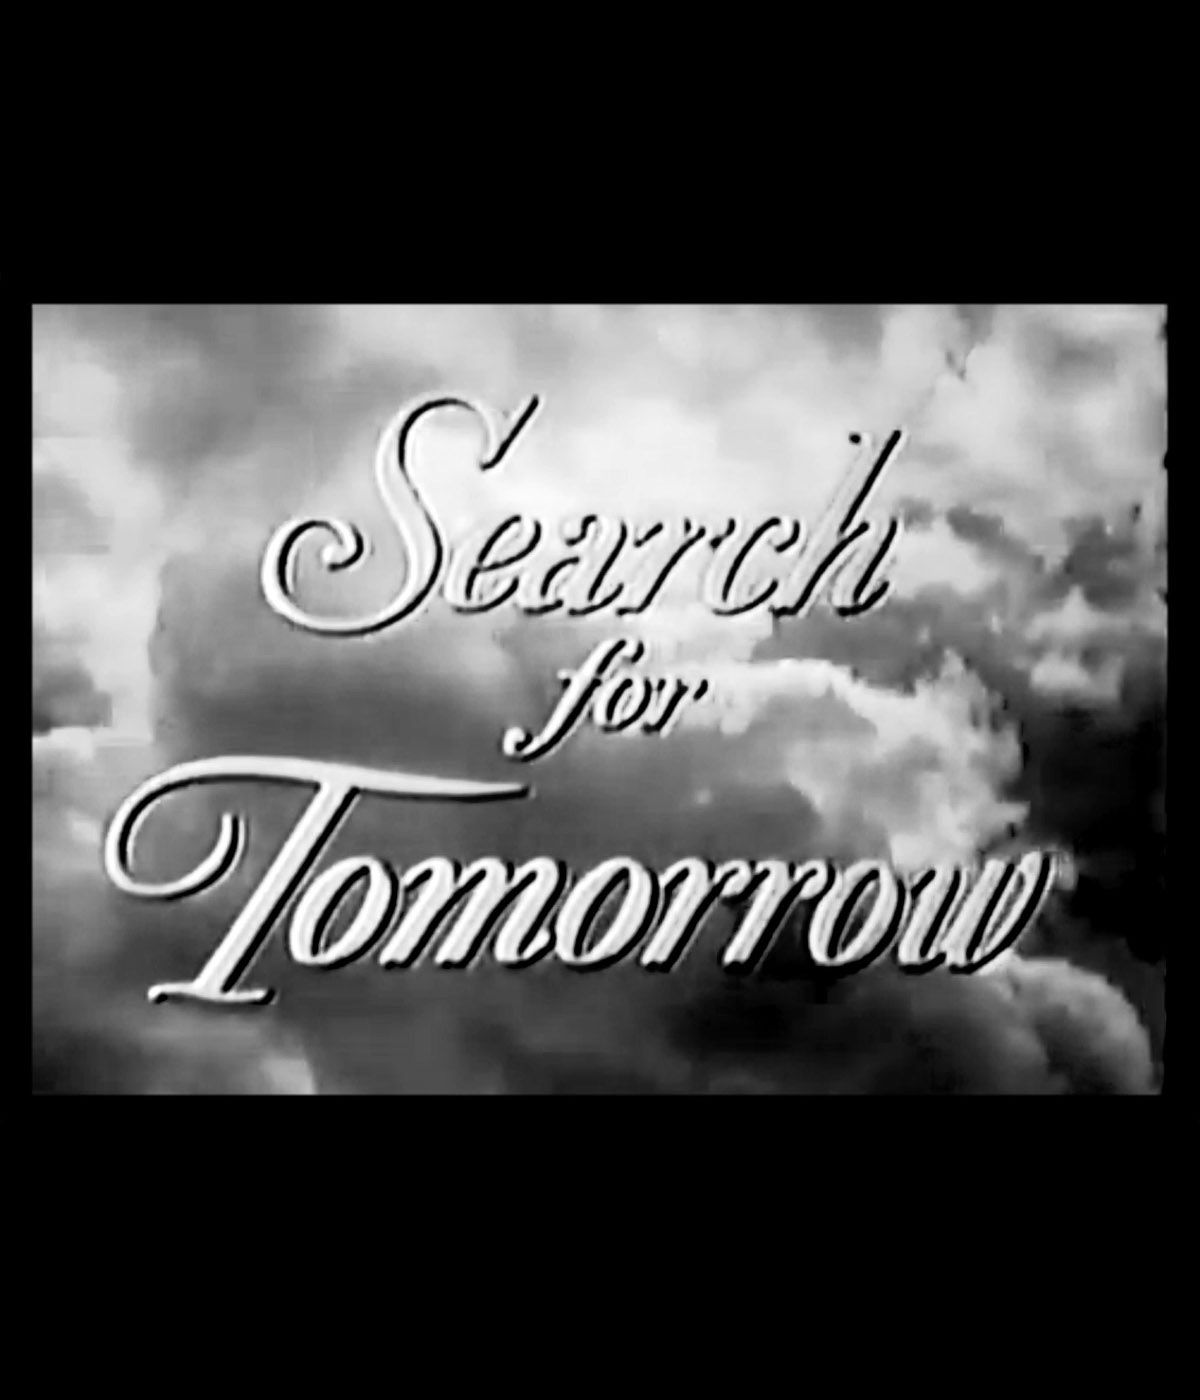 Search for Tomorrow ne zaman